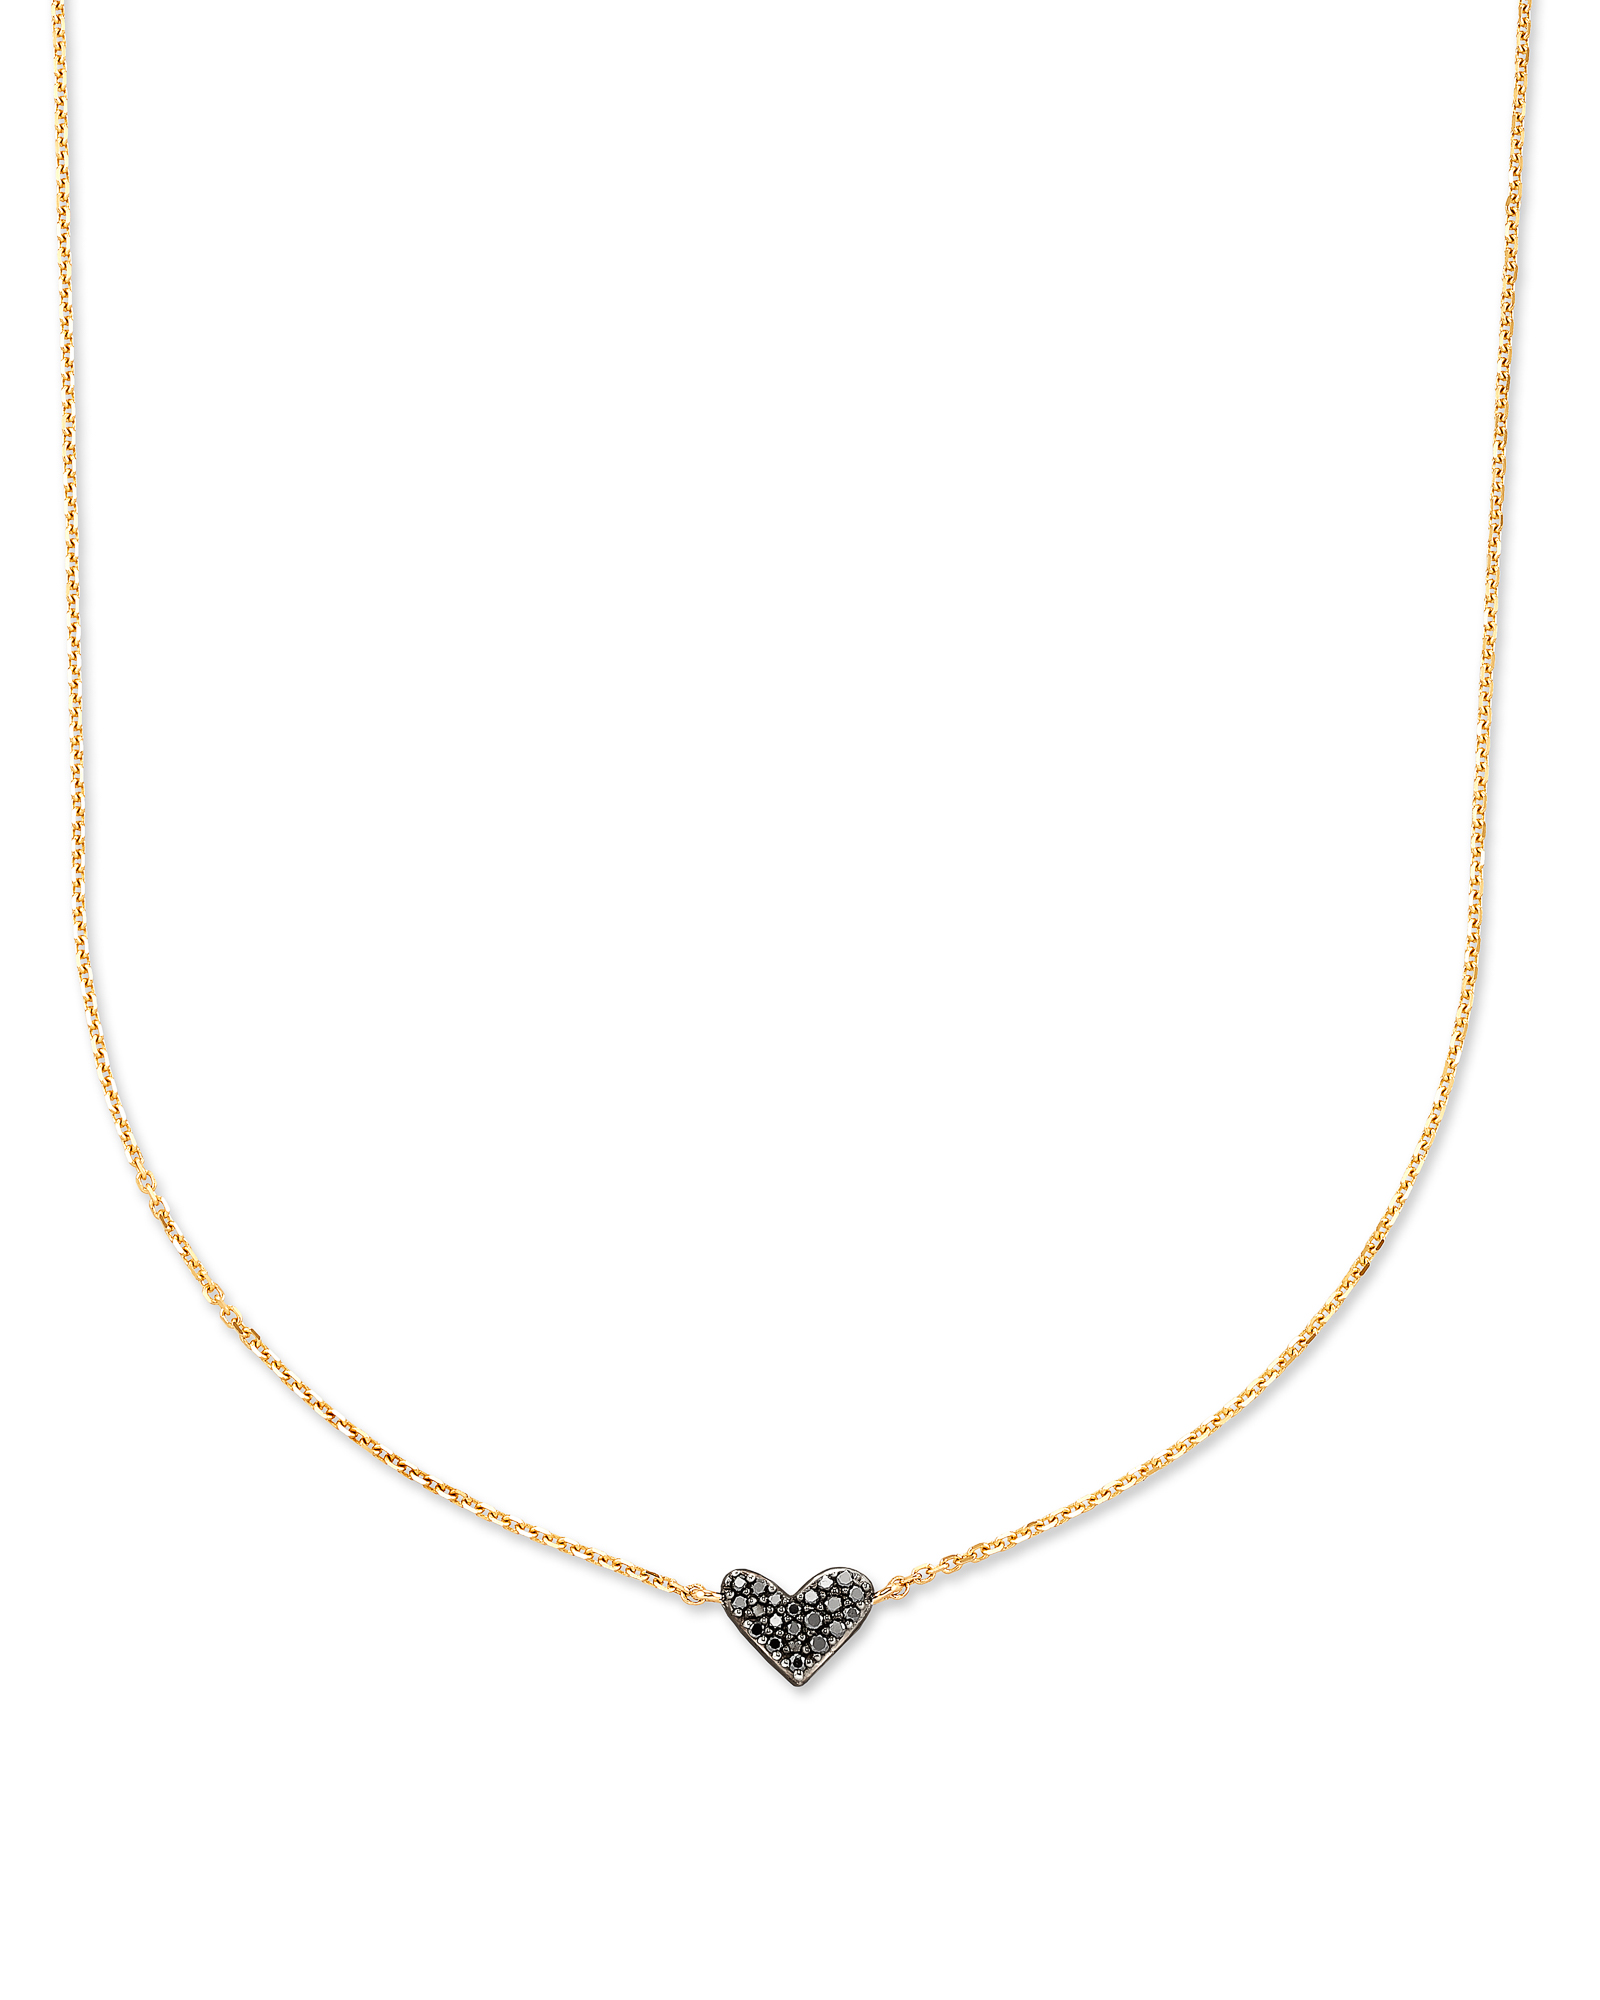 Shannon 14k Yellow Gold Collar Necklace in Black Diamond | Kendra Scott